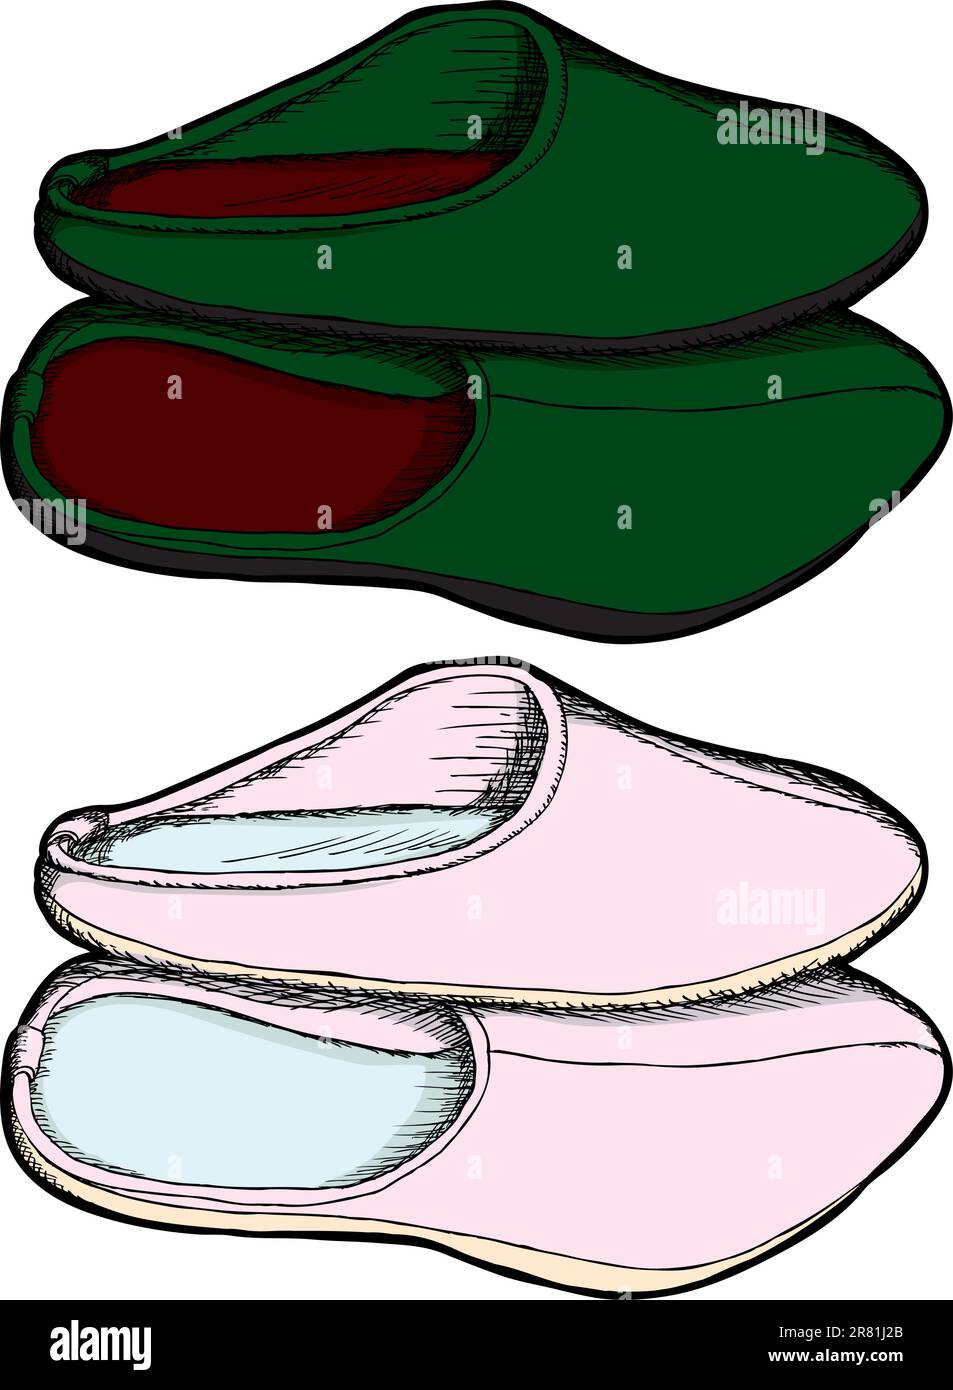 Home Slippers Cartoon Slipper House Feet Stock Vector (Royalty Free)  2201683421 | Shutterstock